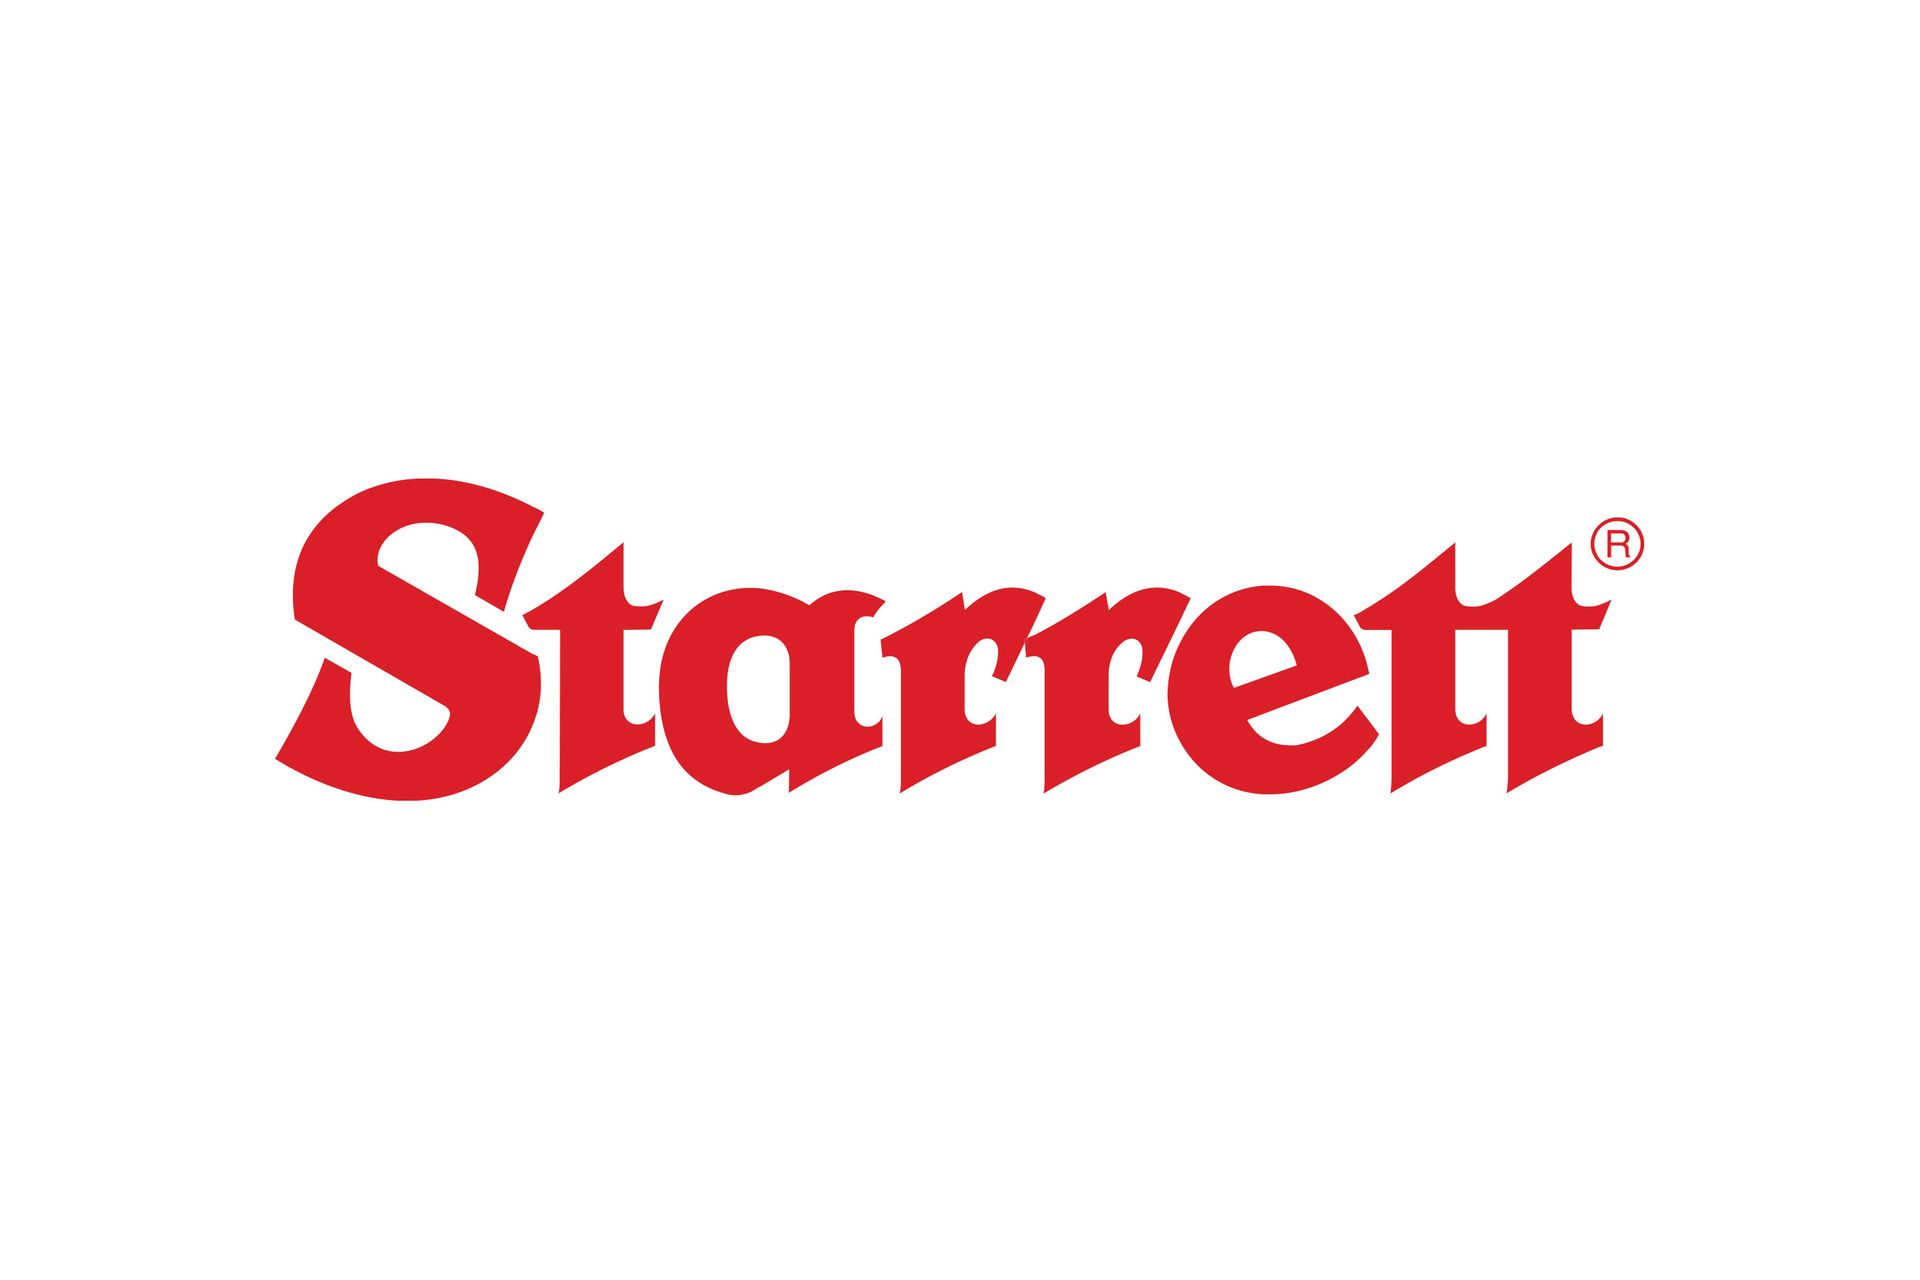 Red Starrett logo